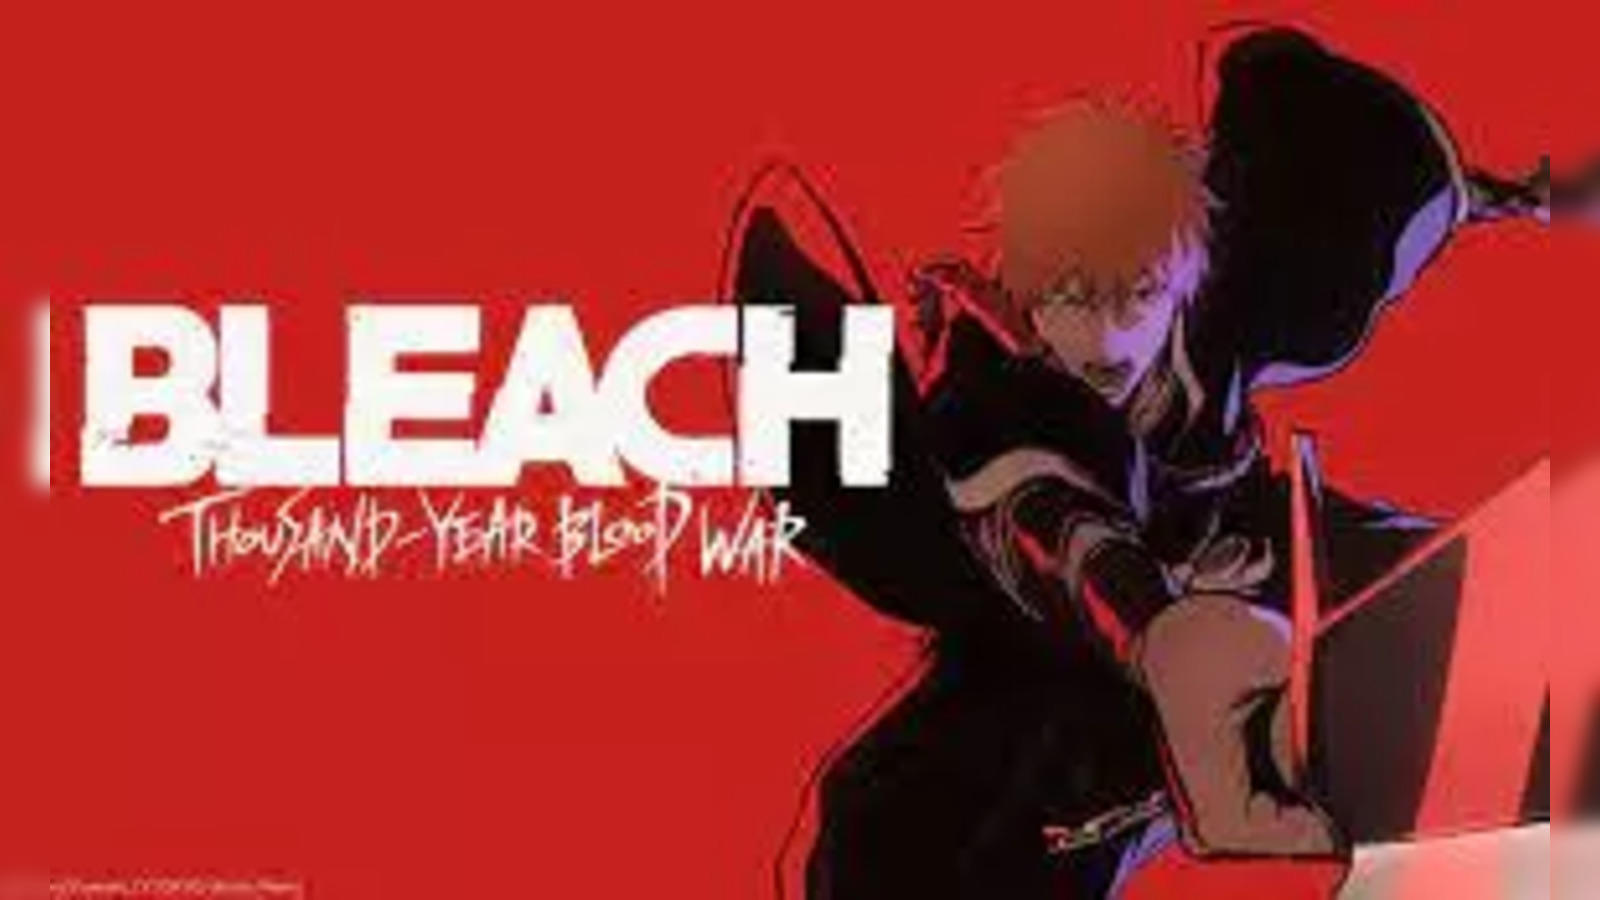 Crunchyroll Removes Bleach Anime From Their Website, Fans